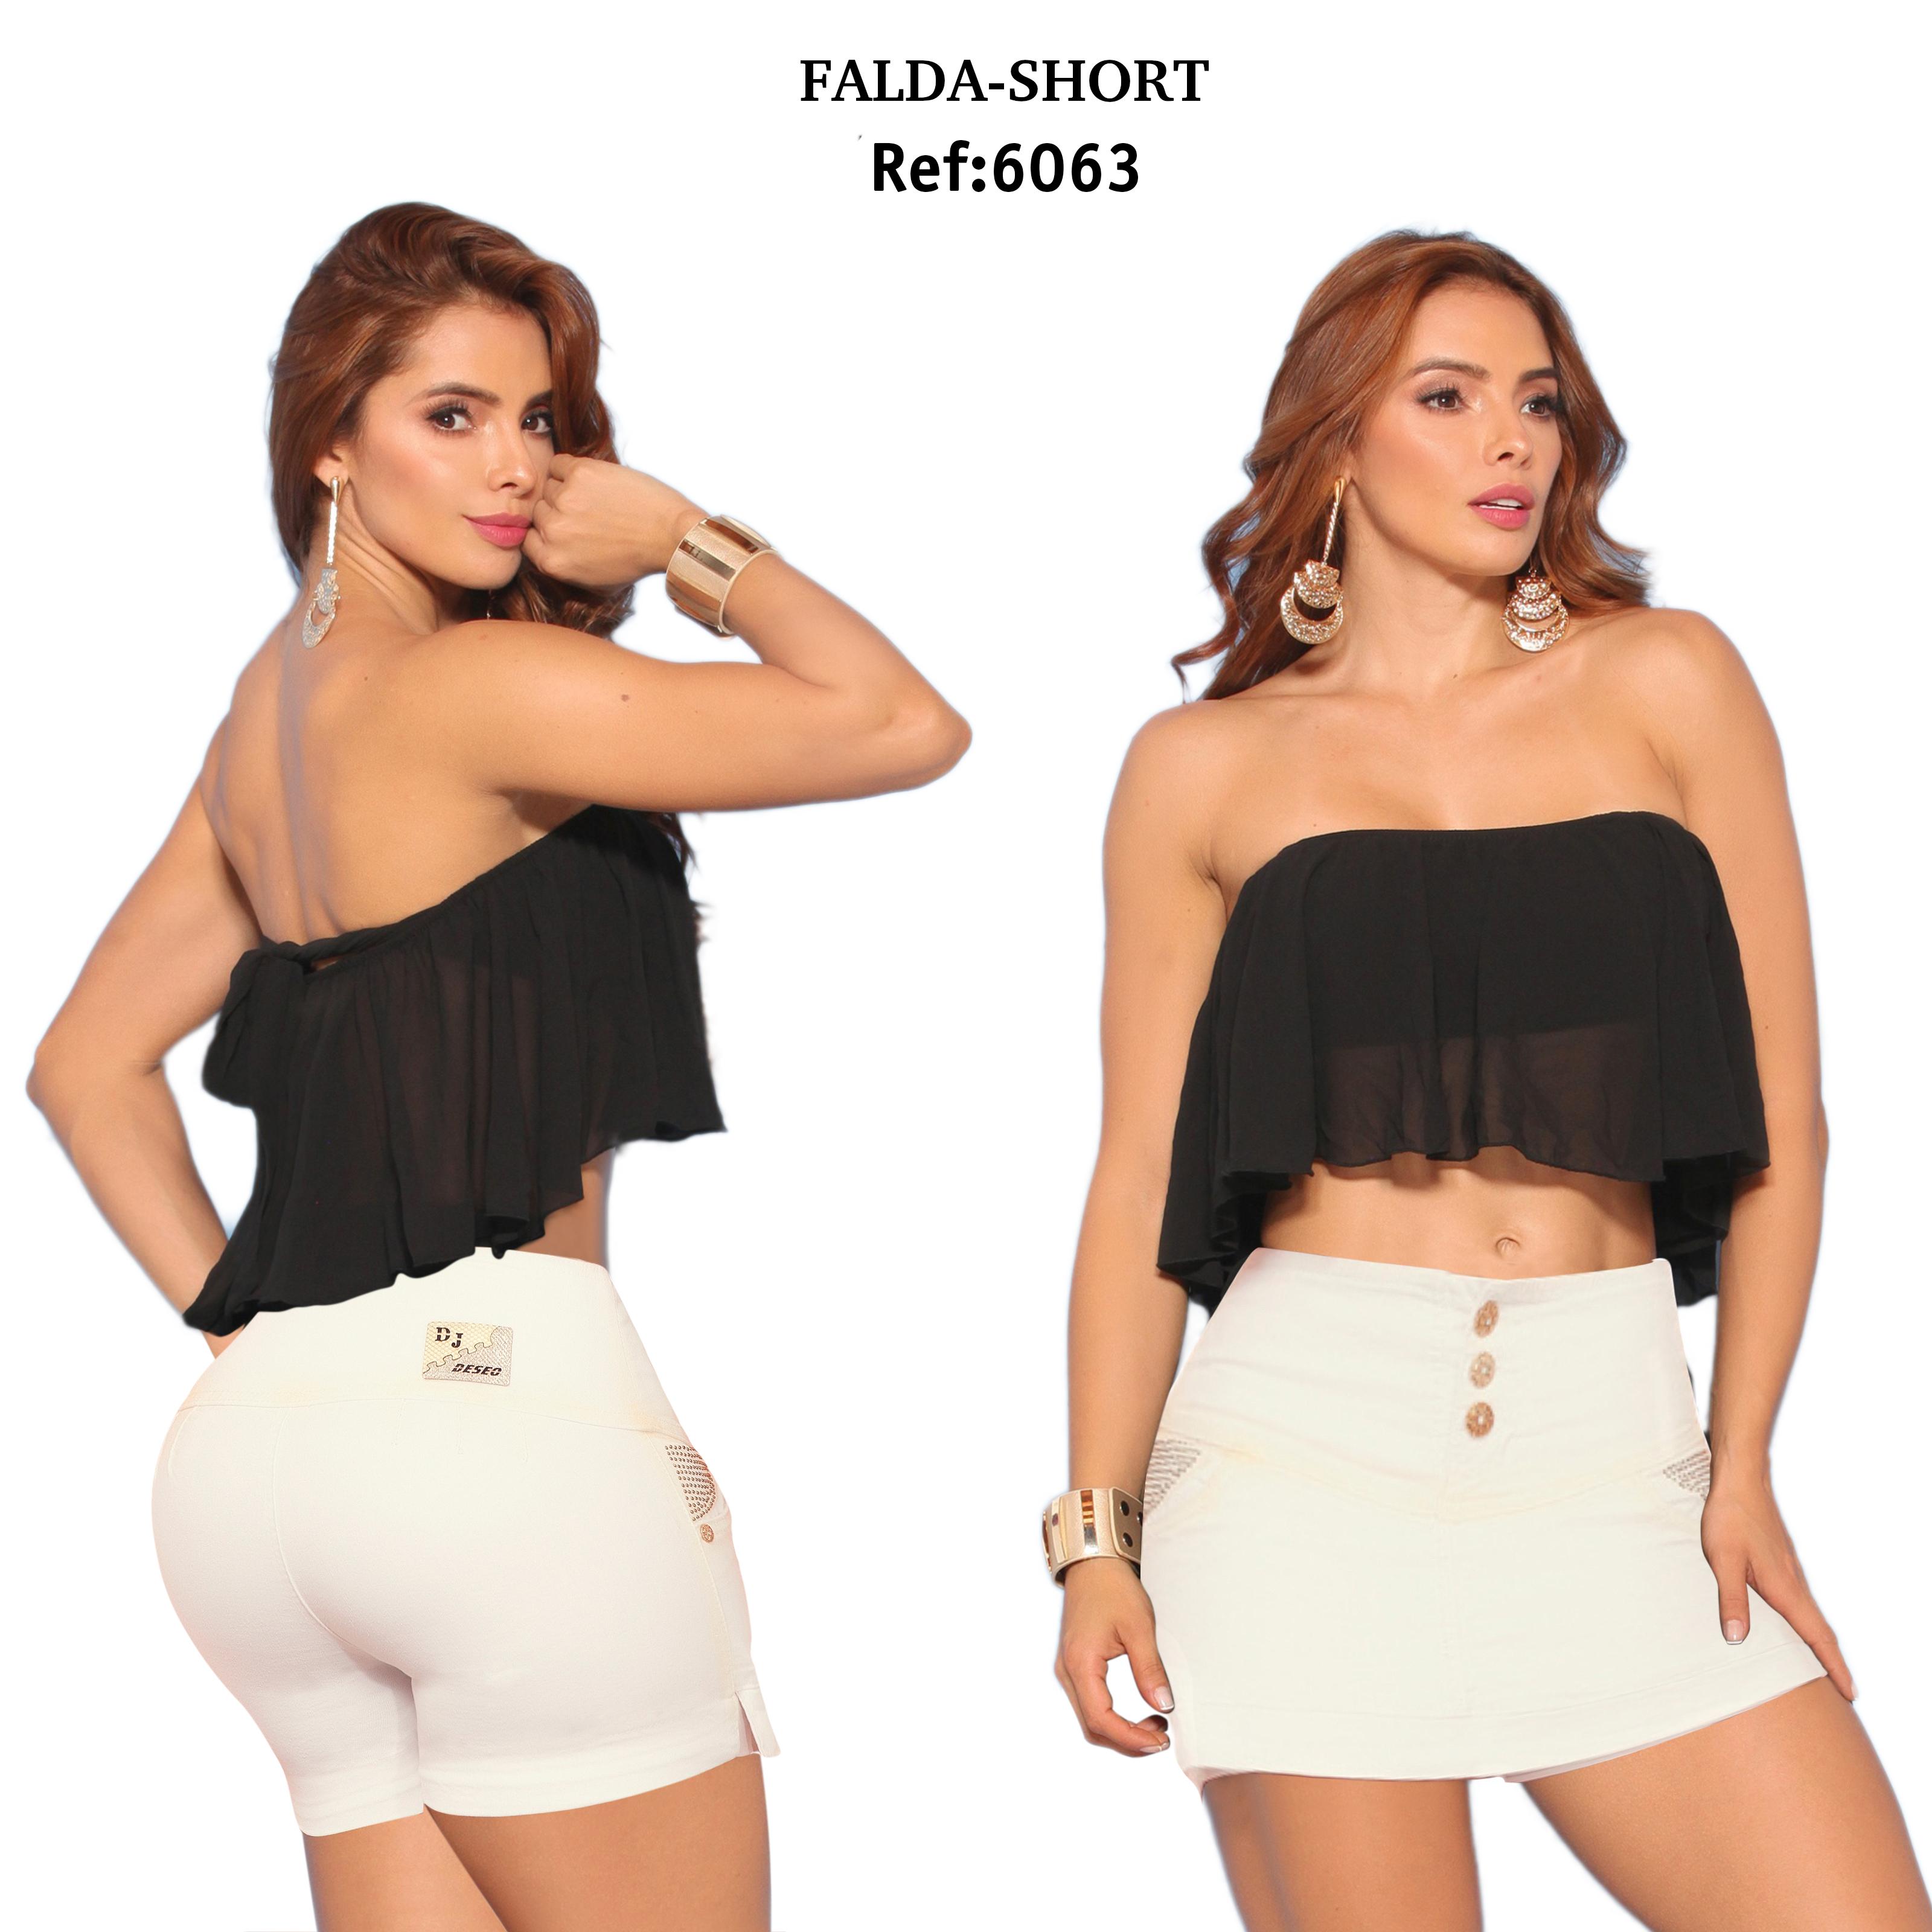 Falda-Short Deseo